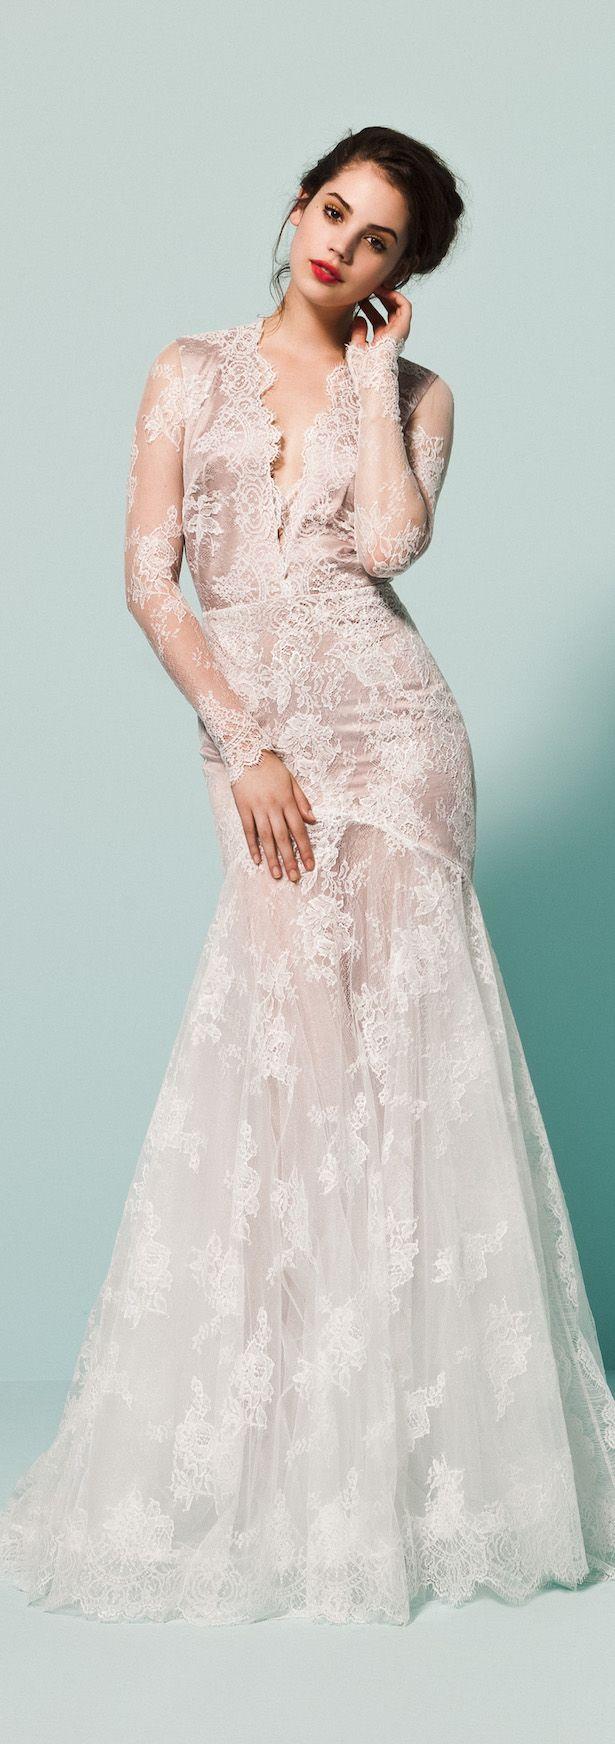 Wedding - Daalarna Couture 2015 "Pearl Bridal Collection"